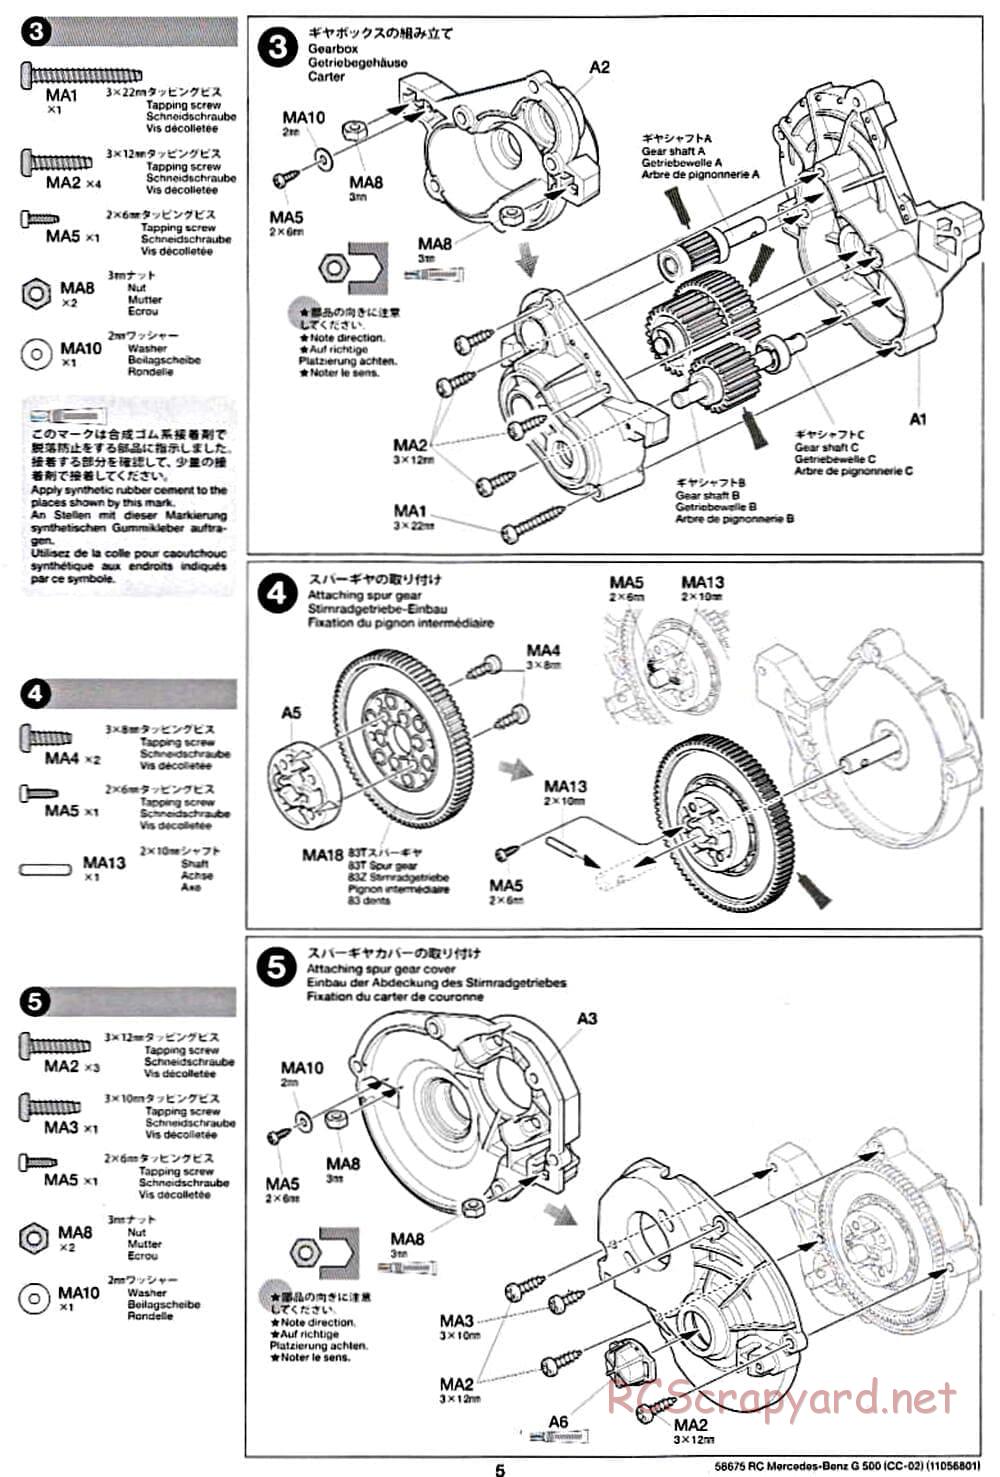 Tamiya - Mercedes-Benz G500 - CC-02 Chassis - Manual - Page 5